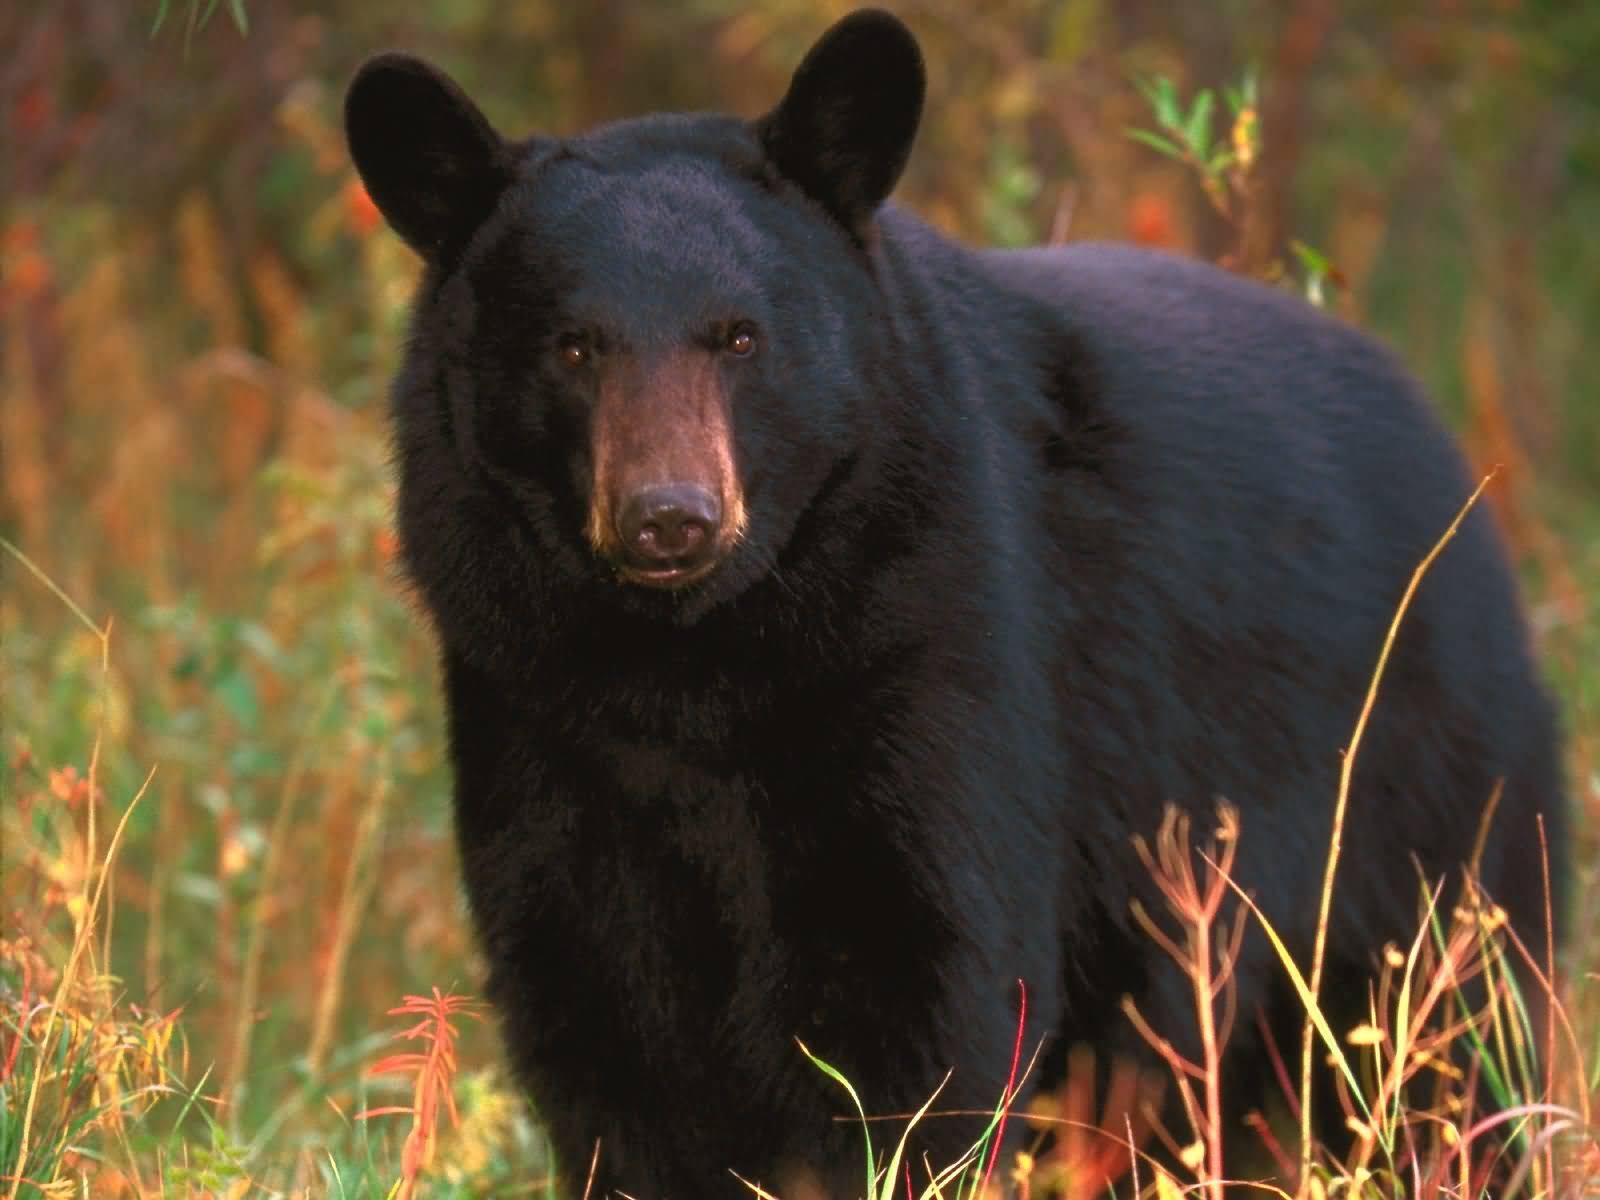 More Bear sightings possible in Prince George